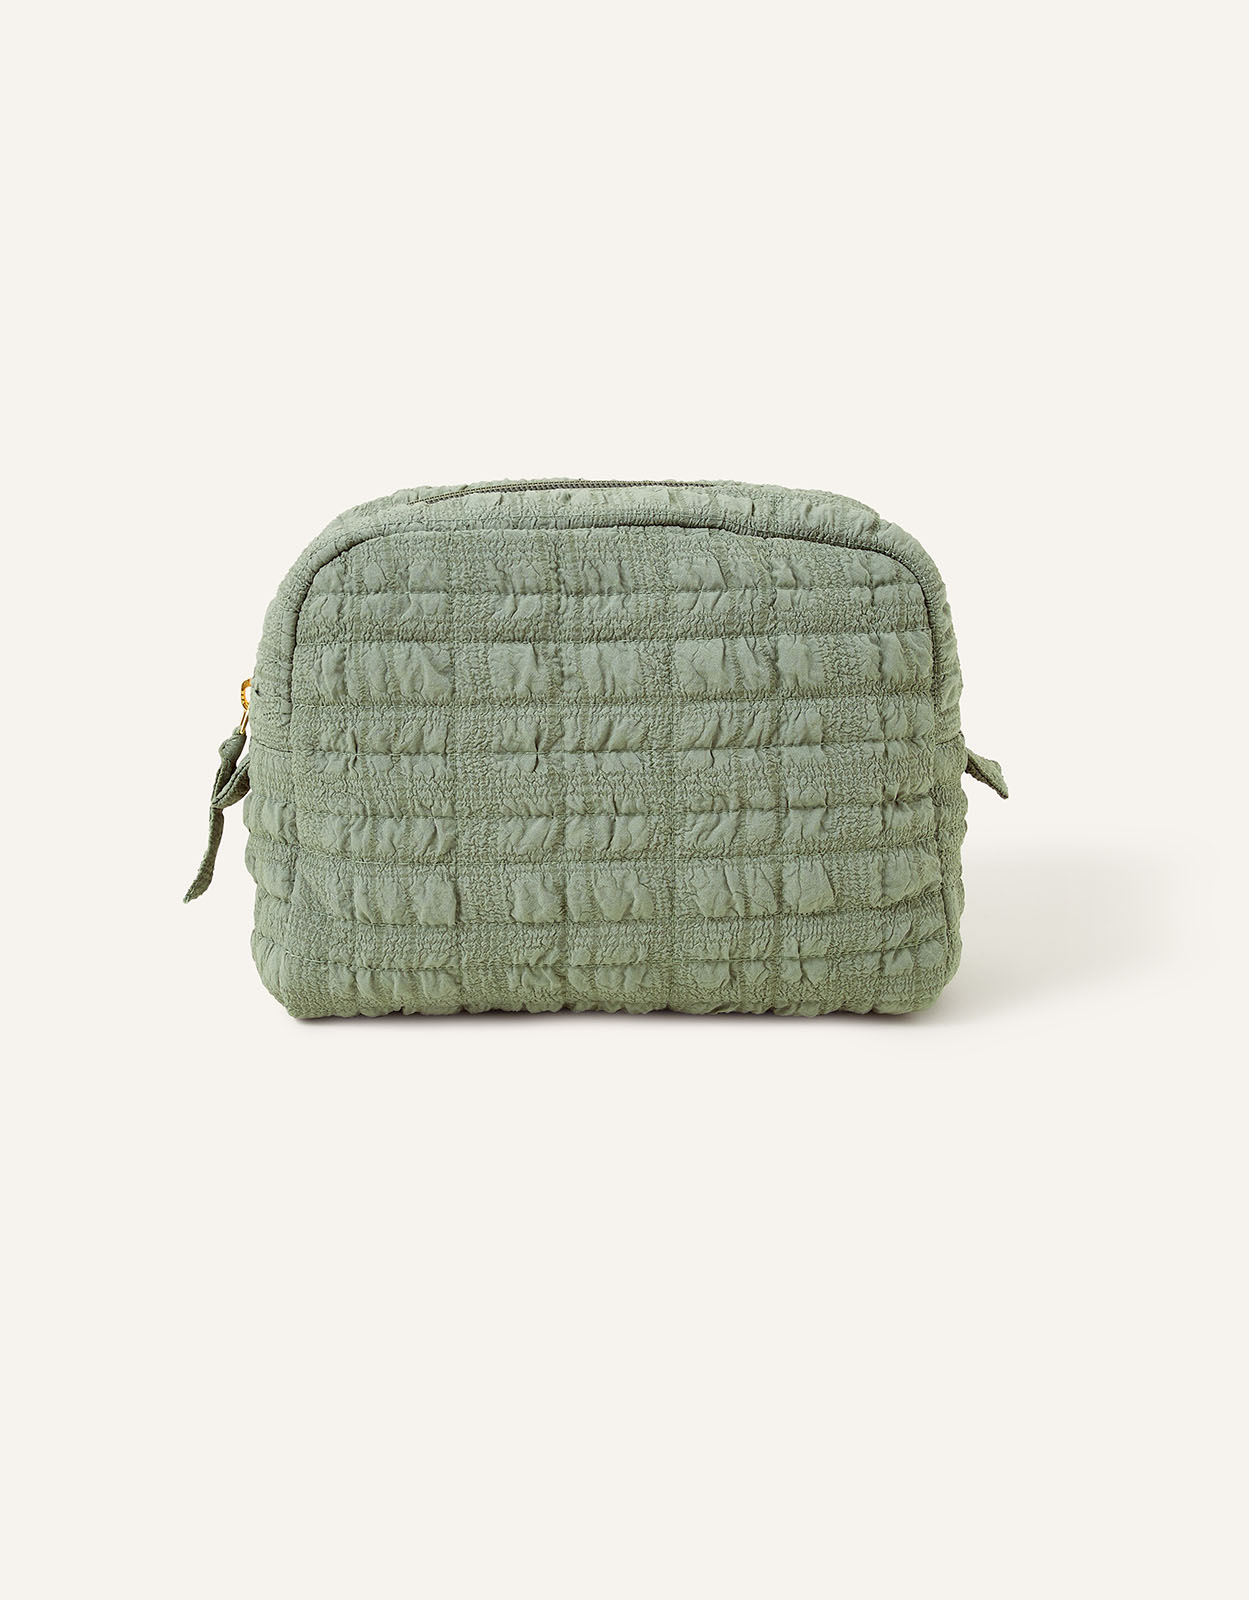 Accessorize Women's Seersucker Make Up Bag Green, Size: L 16 cm x W 22 cm